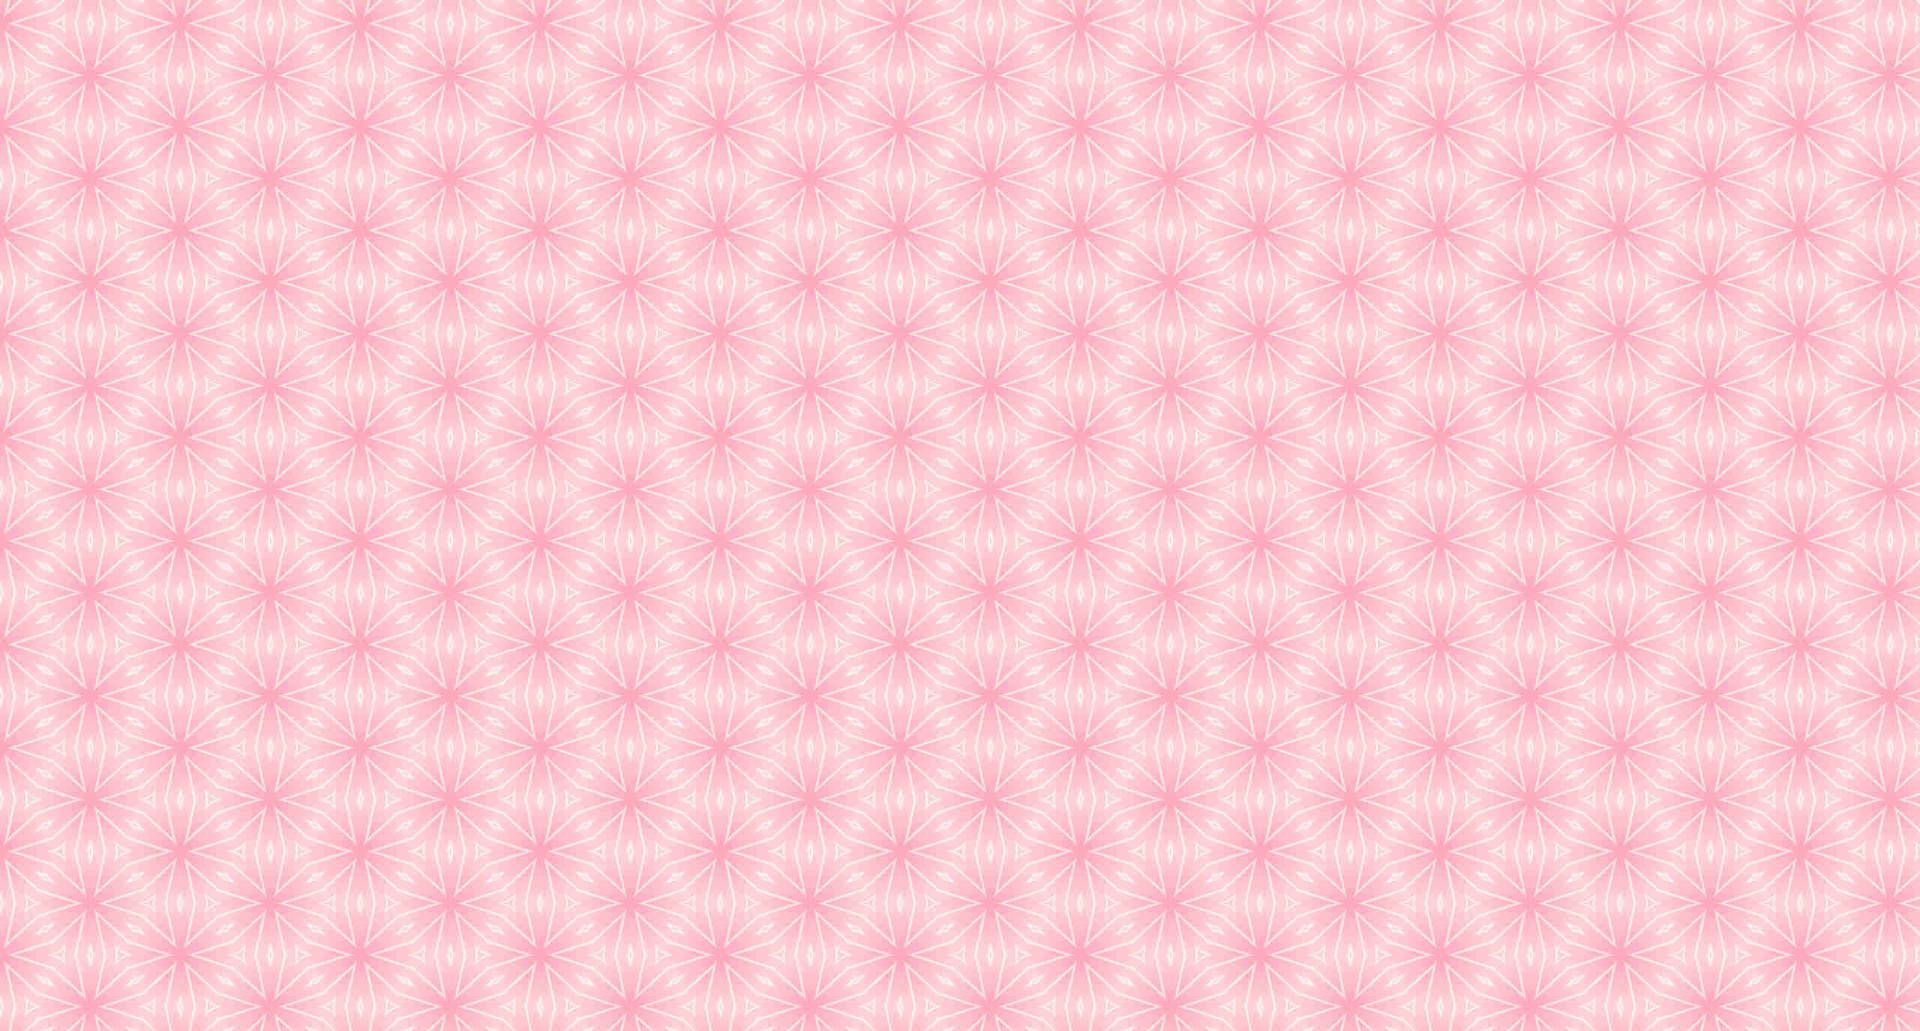 Pink and white polka dot pattern - Pattern